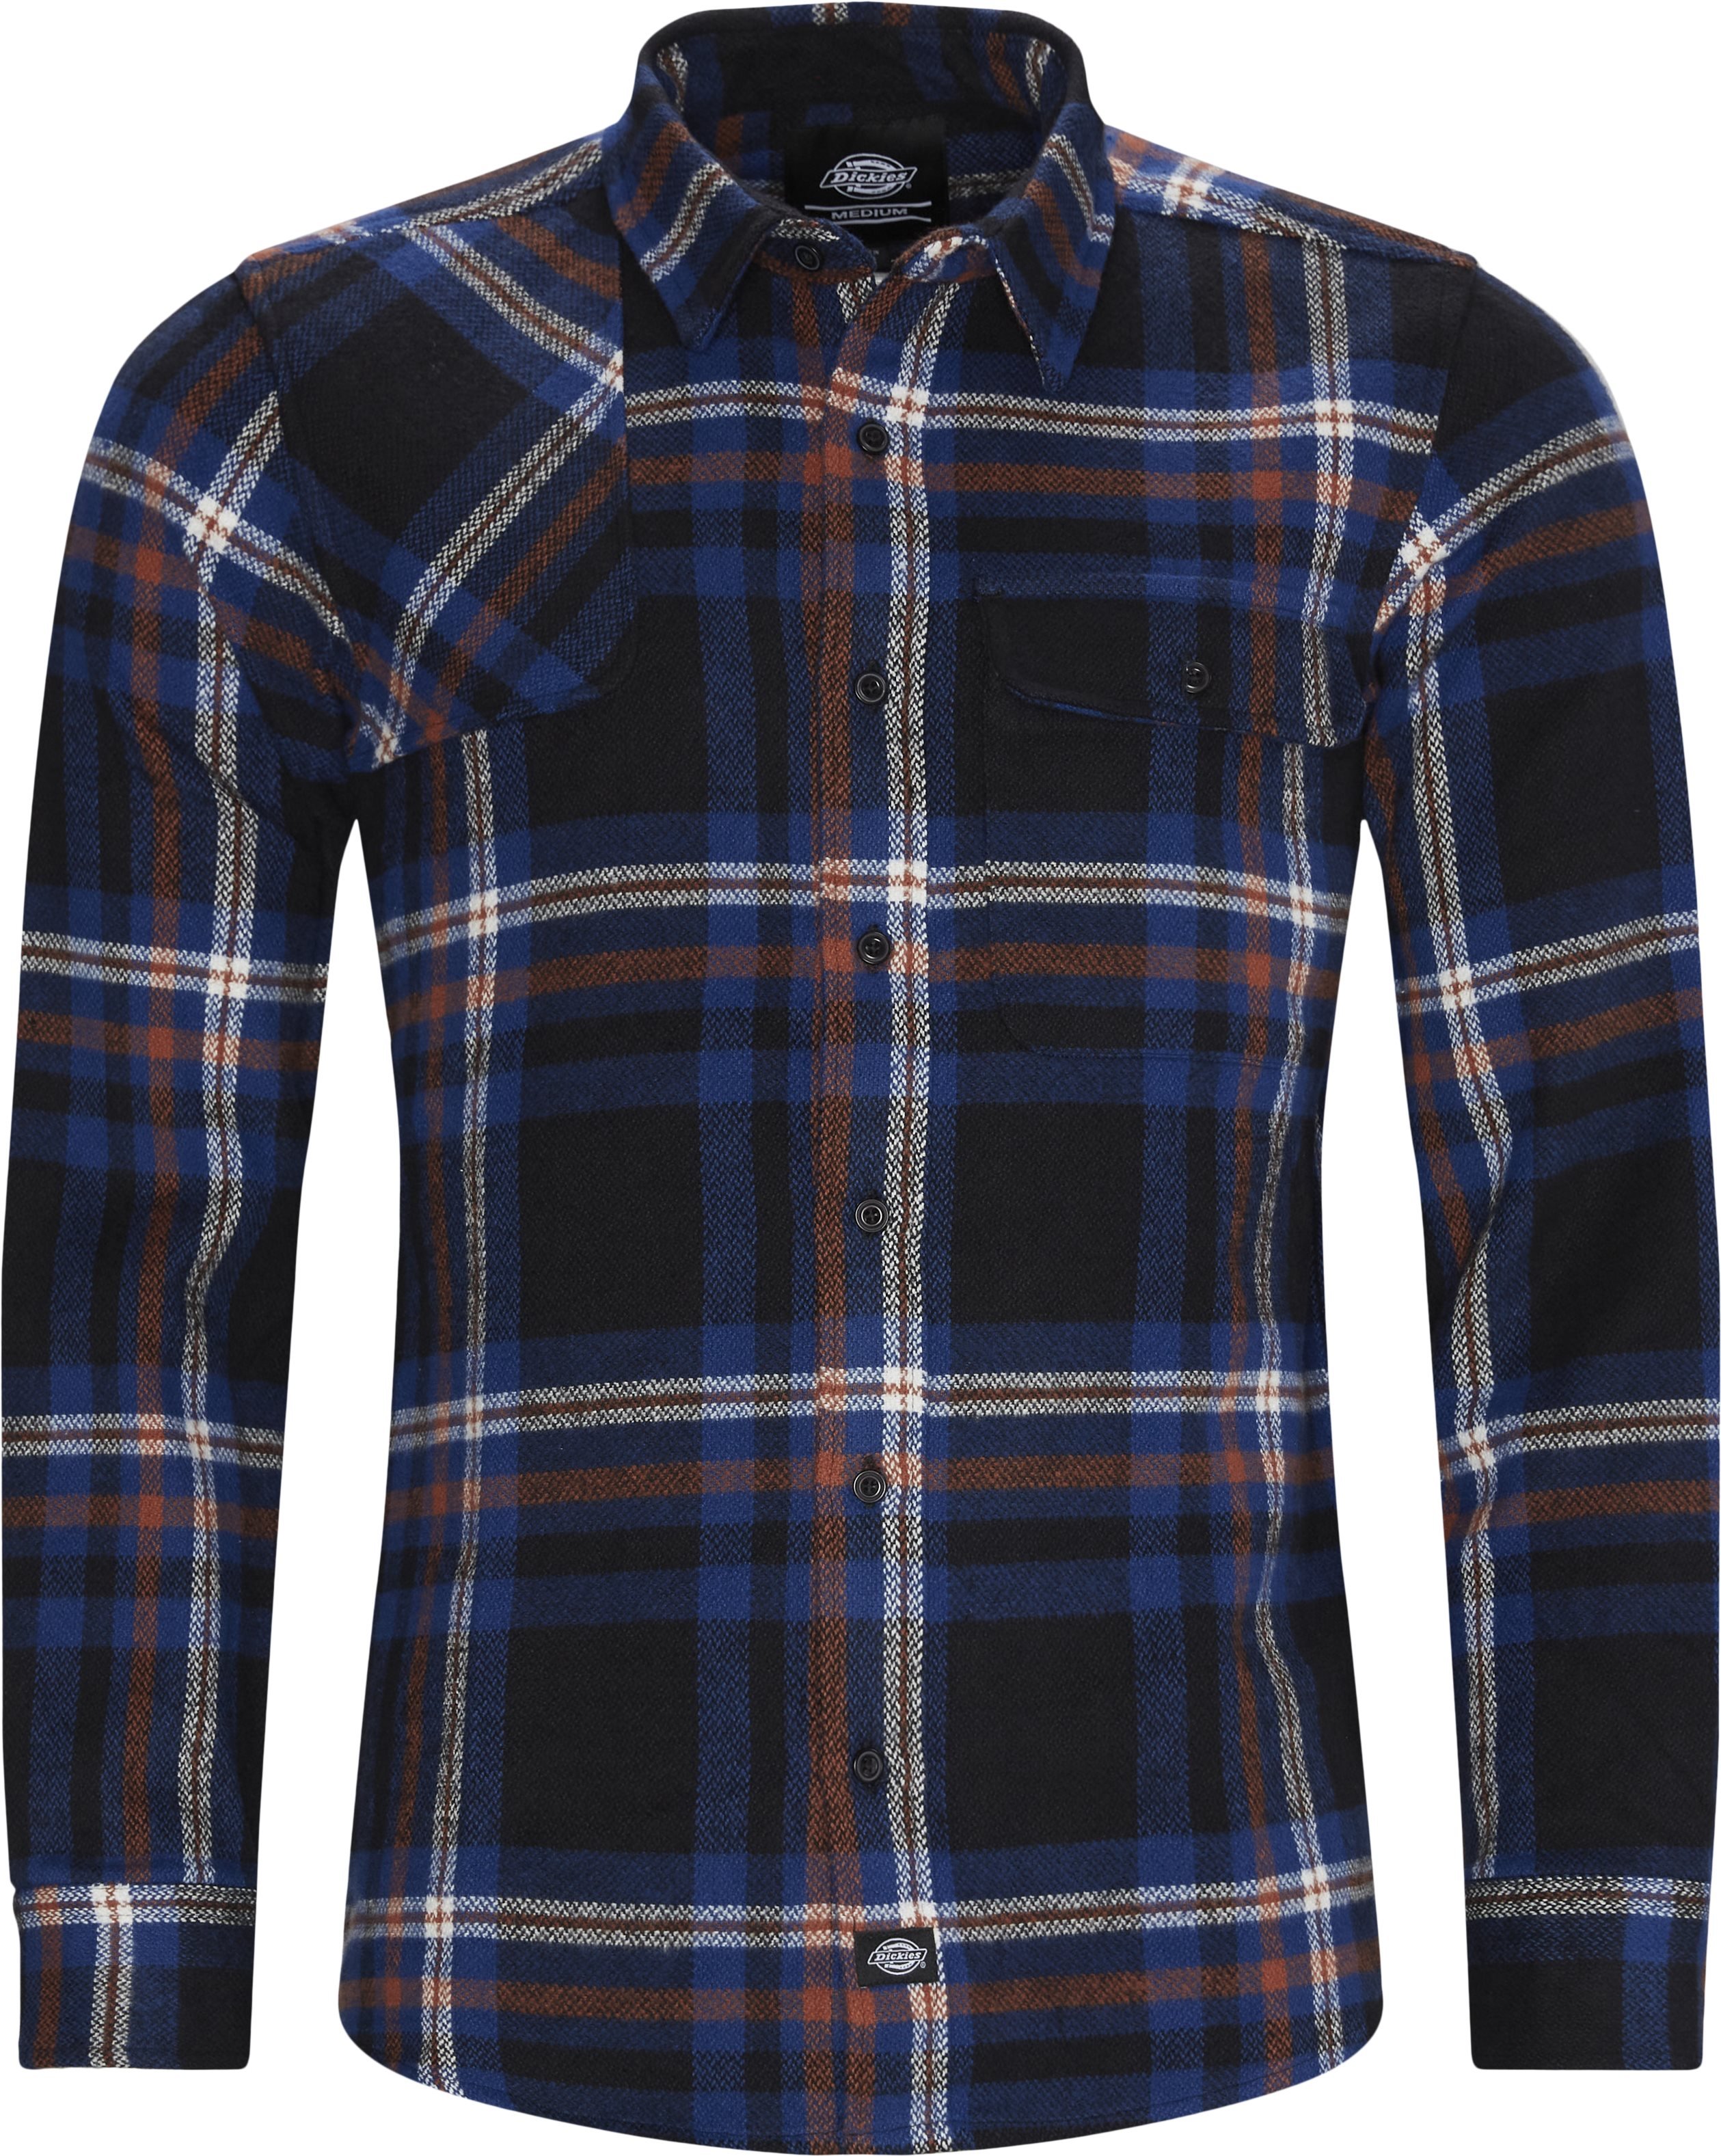 Prestonburg Shirt - Shirts - Regular fit - Blue